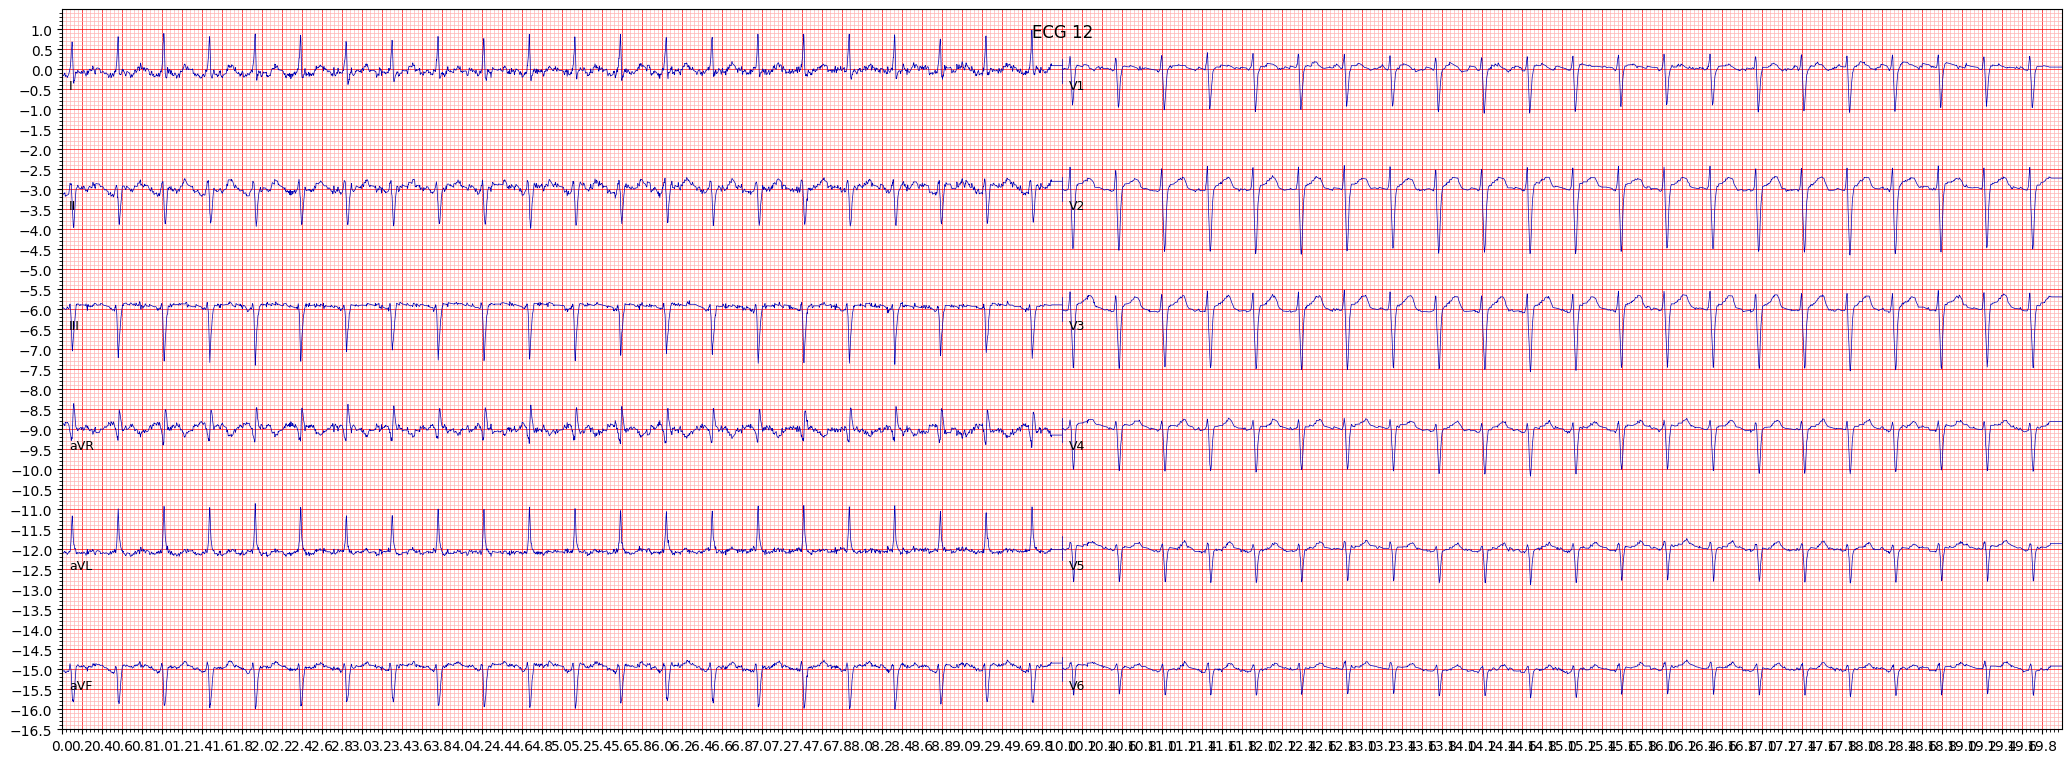 paroxysmal supraventricular tachycardia (PSVT) example 12346